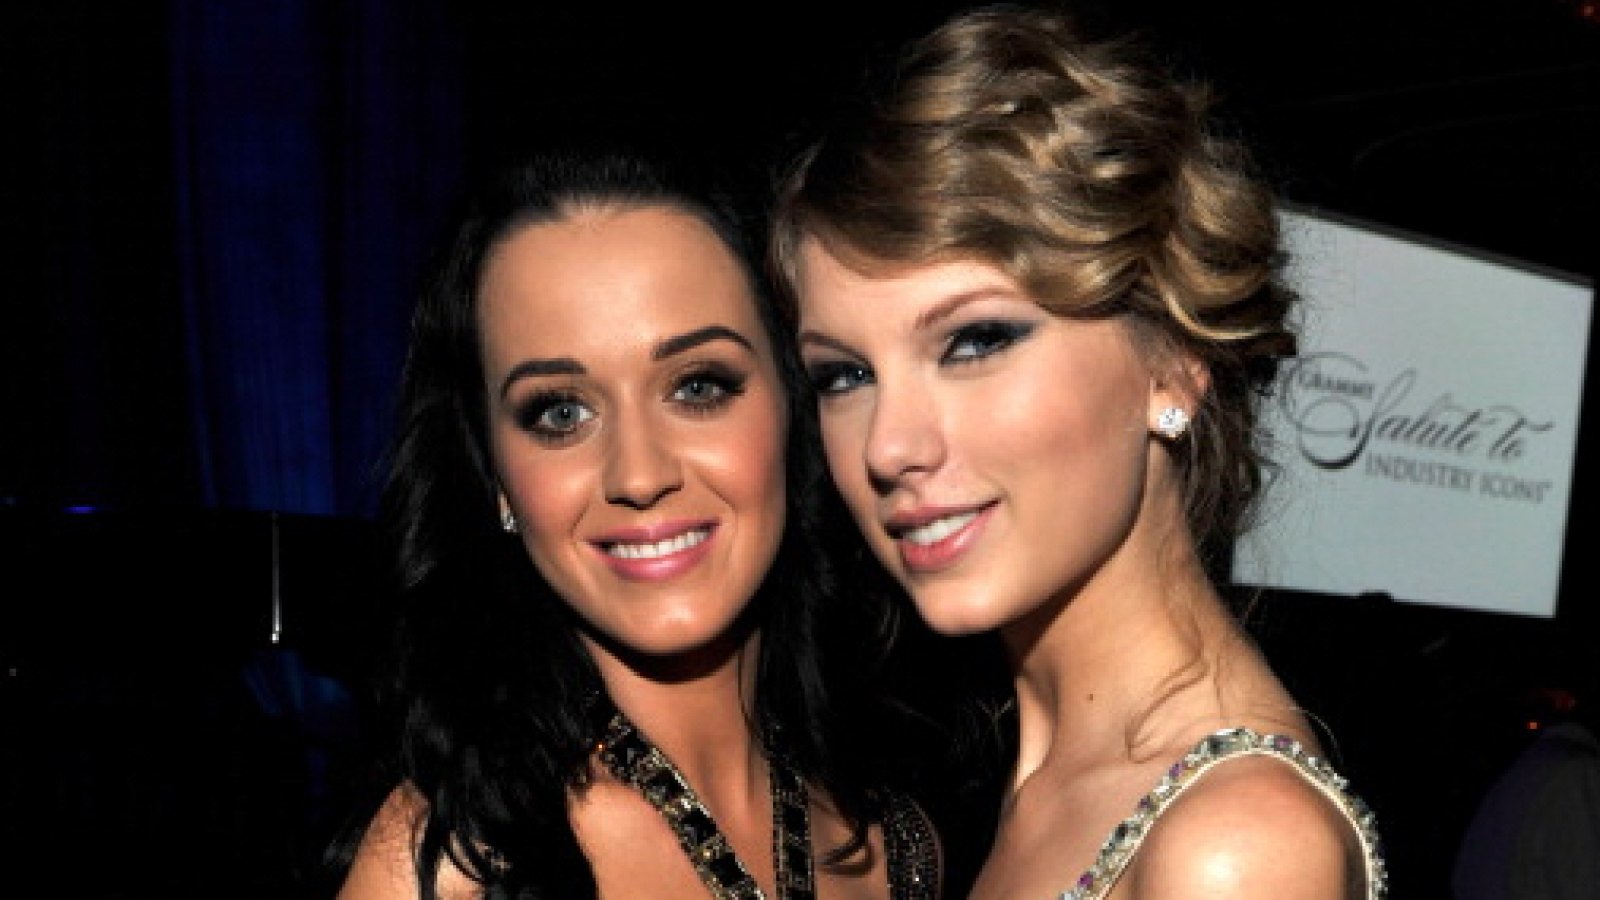 Katy Perry threw shade at Taylor Swift